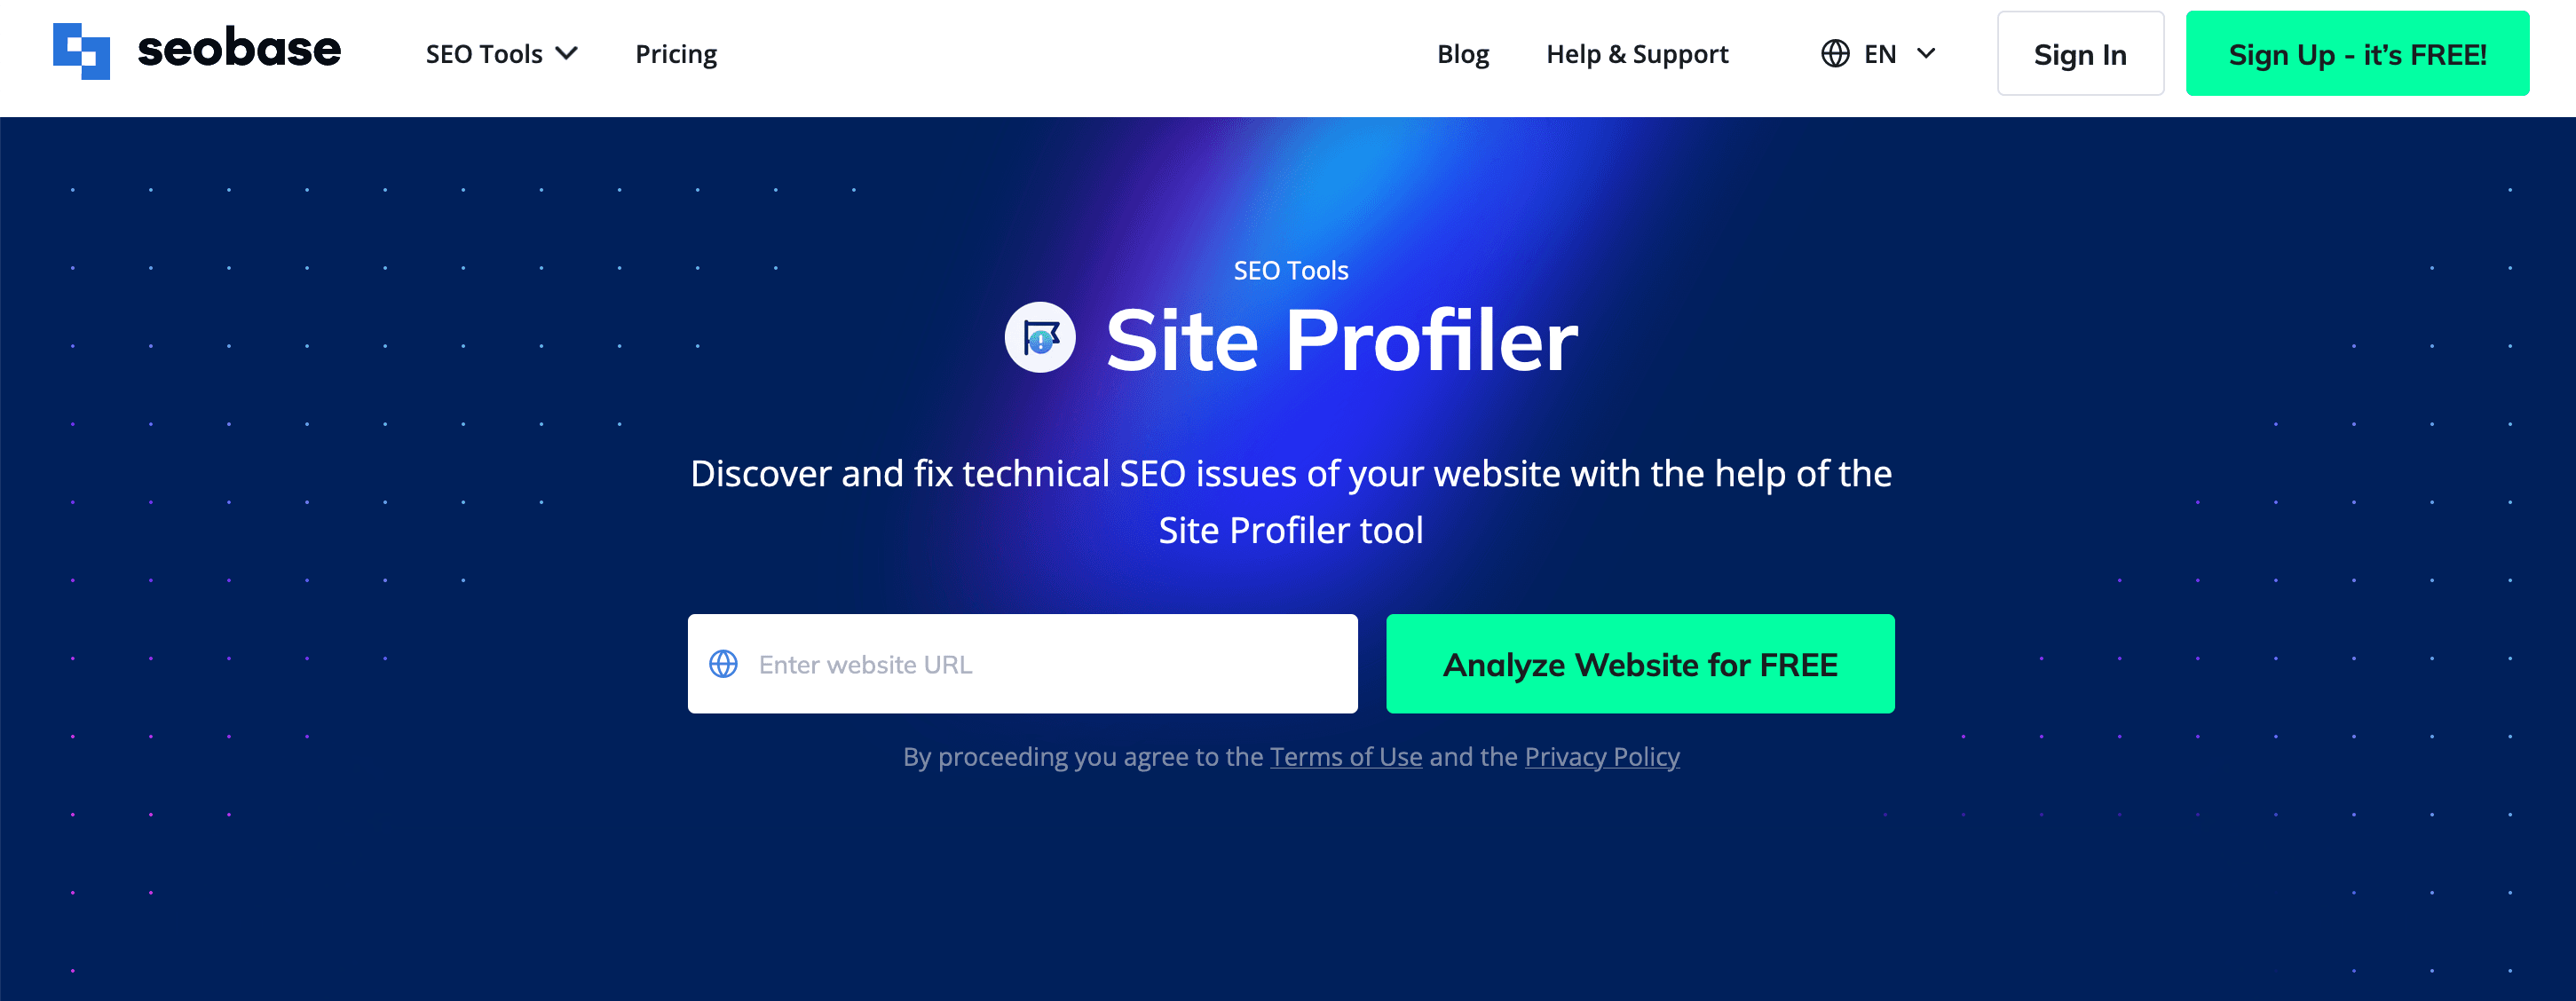 best site profiler tool 